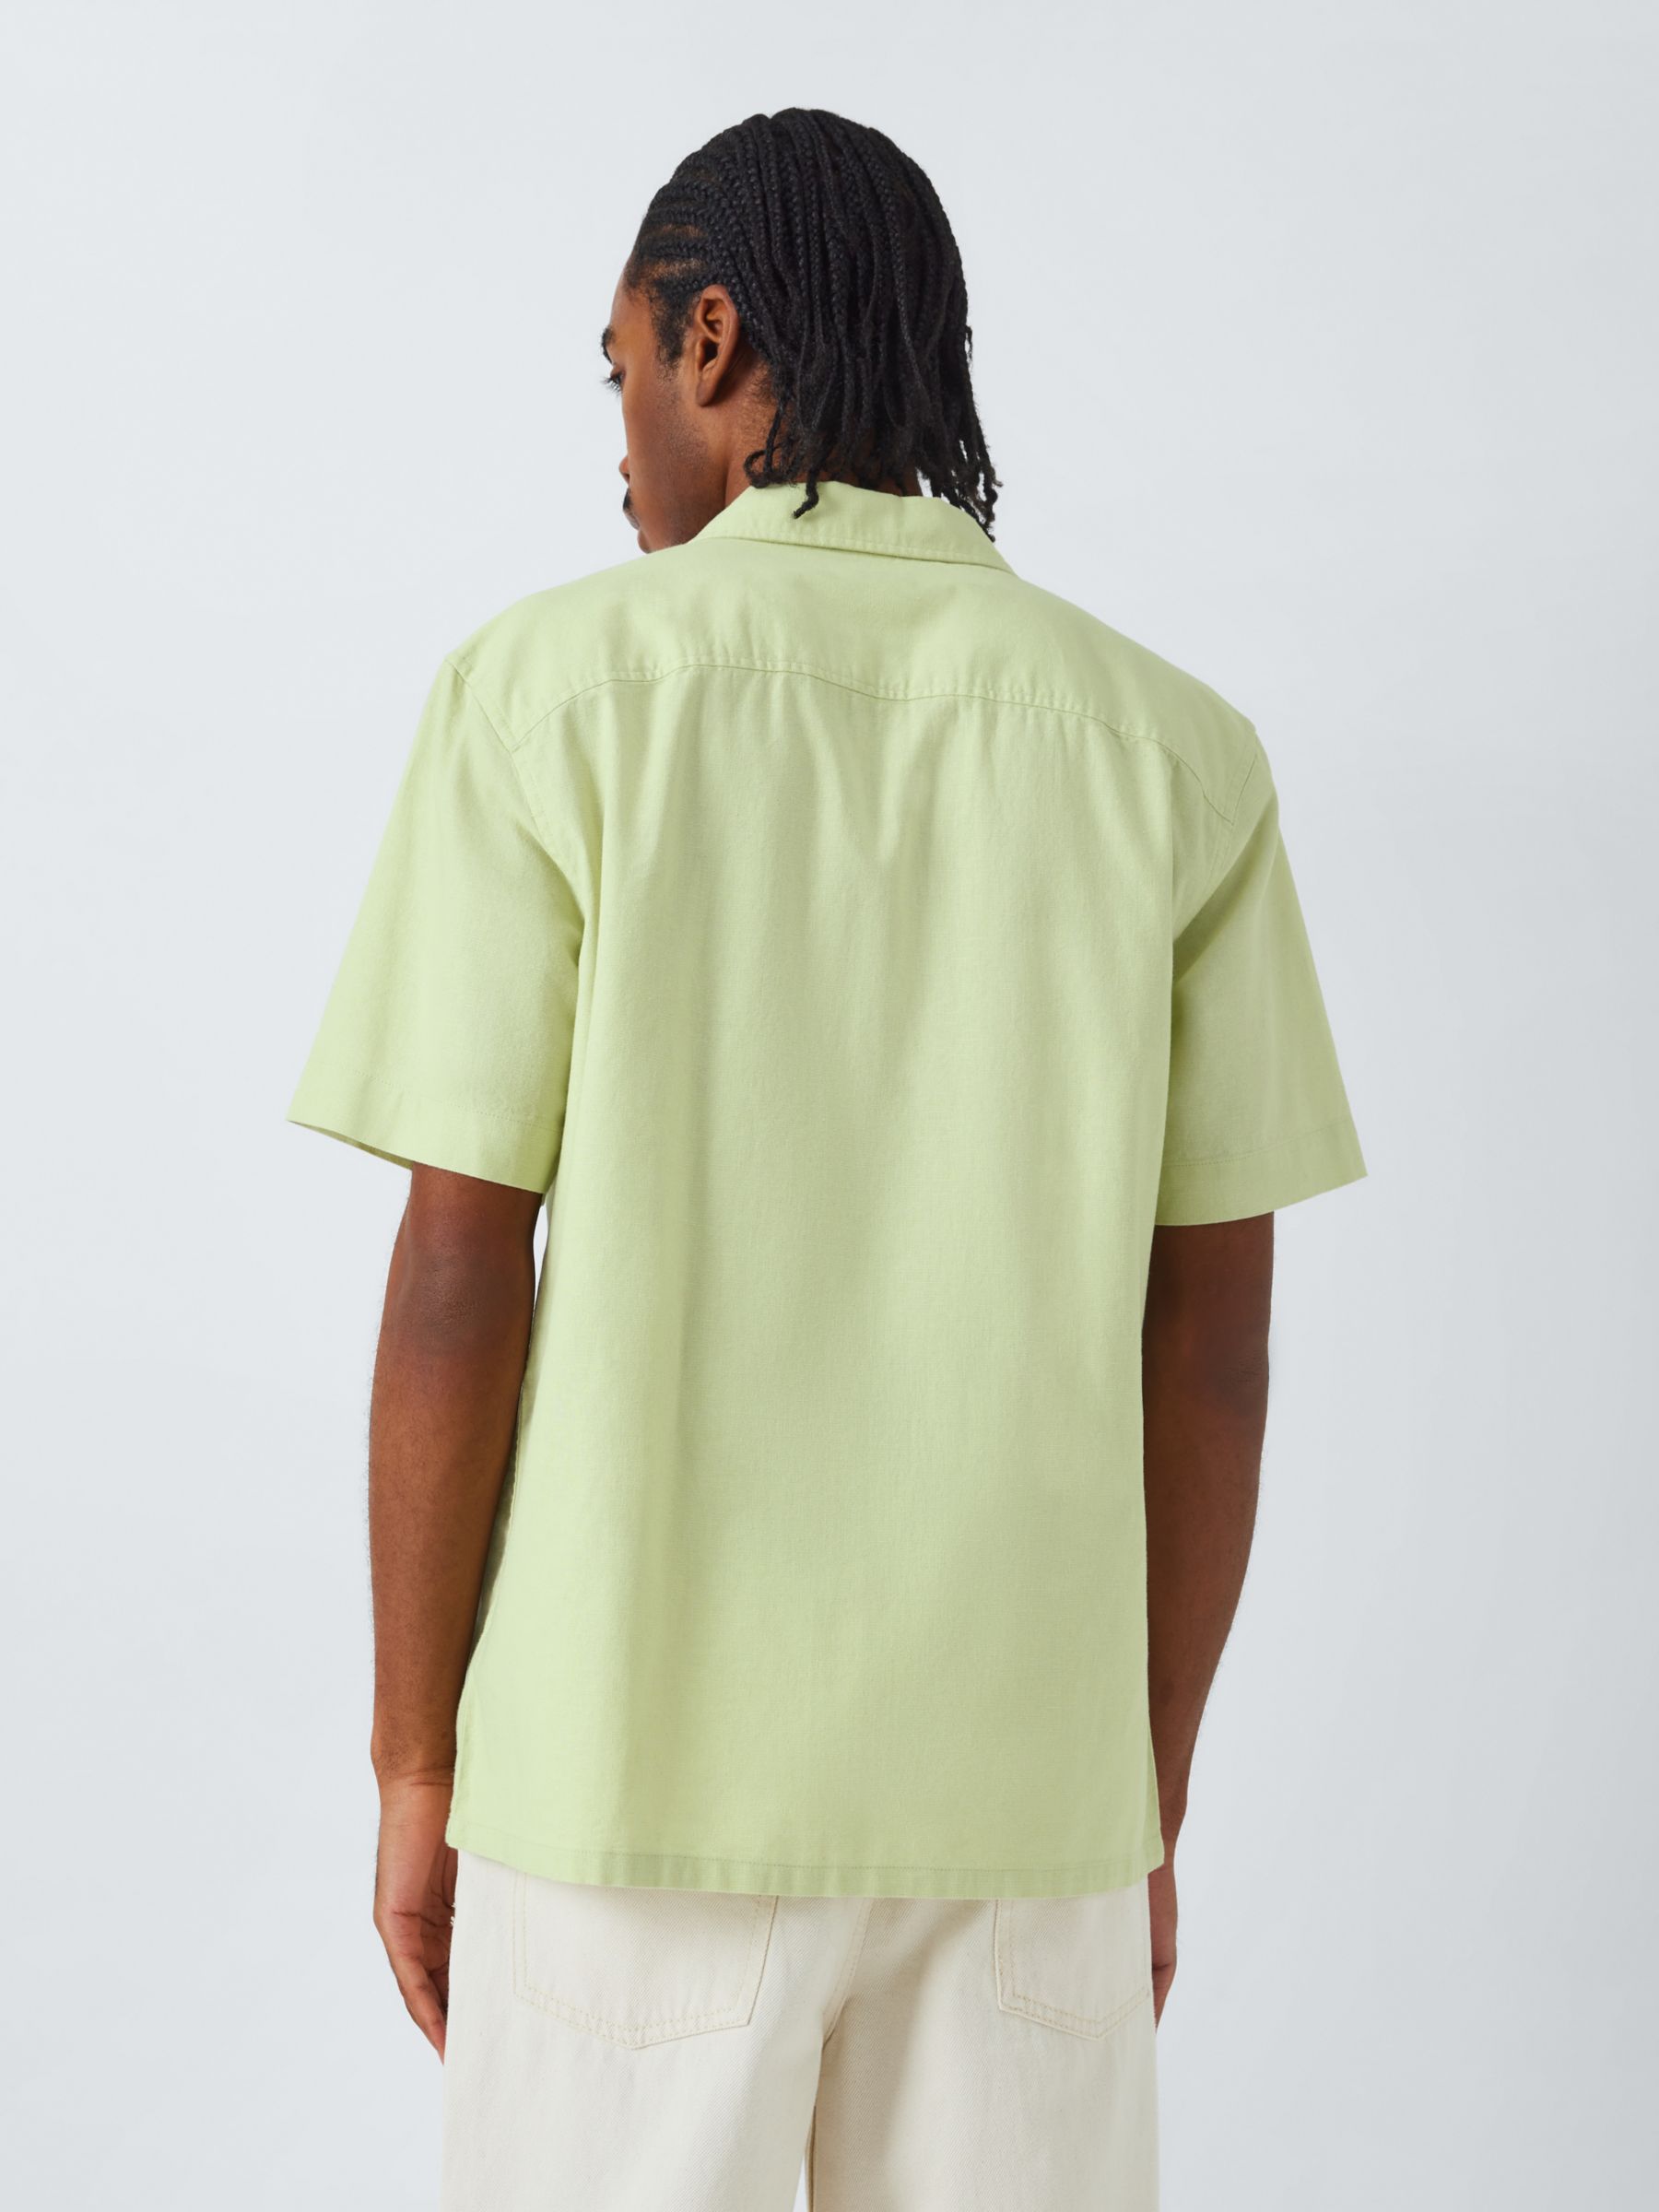 John Lewis ANYDAY Cotton & Linen Cuban Collar Shirt, Celadon Green, S